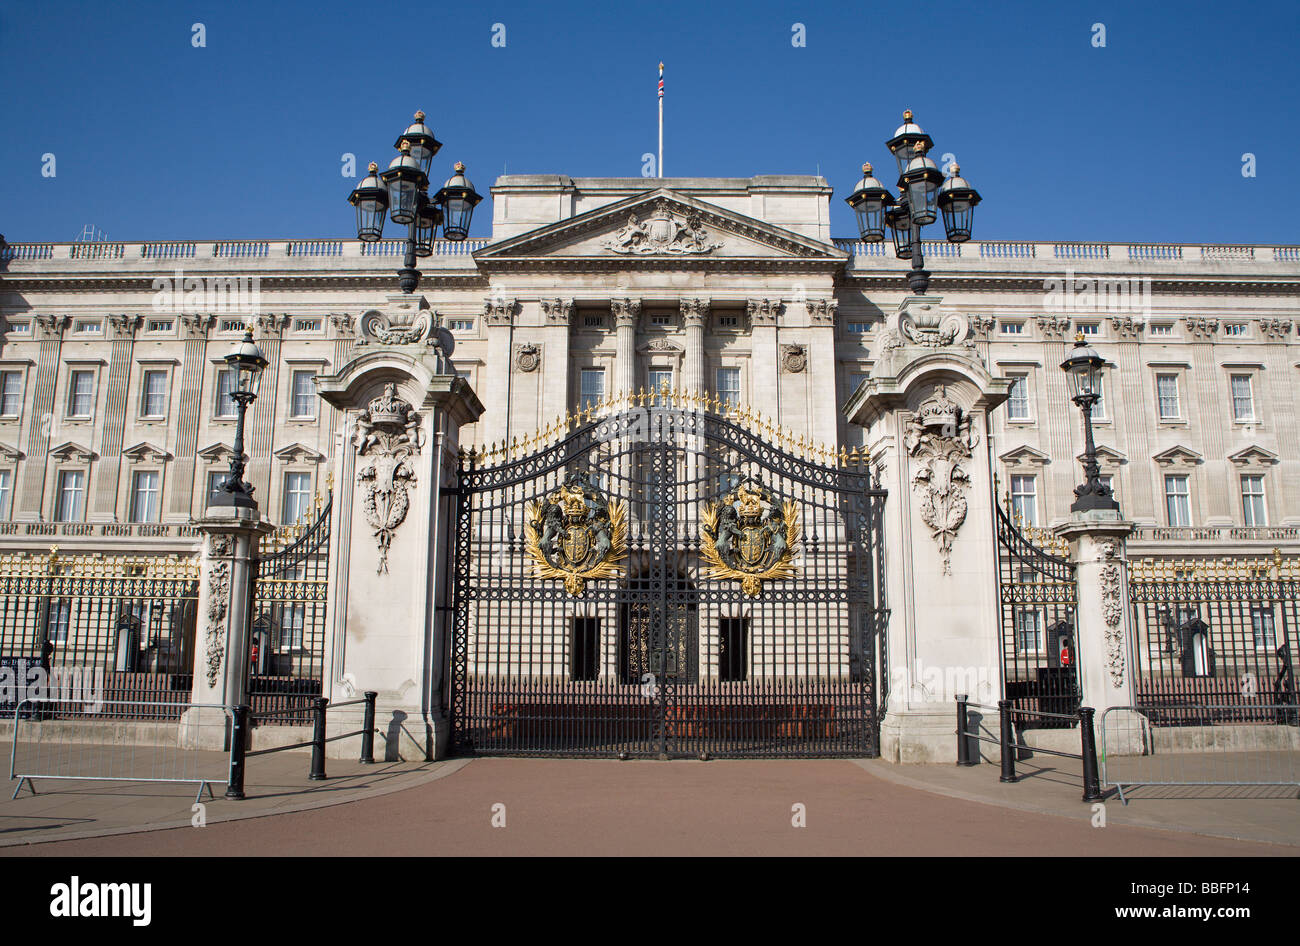 London - Buckingham palace and gate Stock Photo